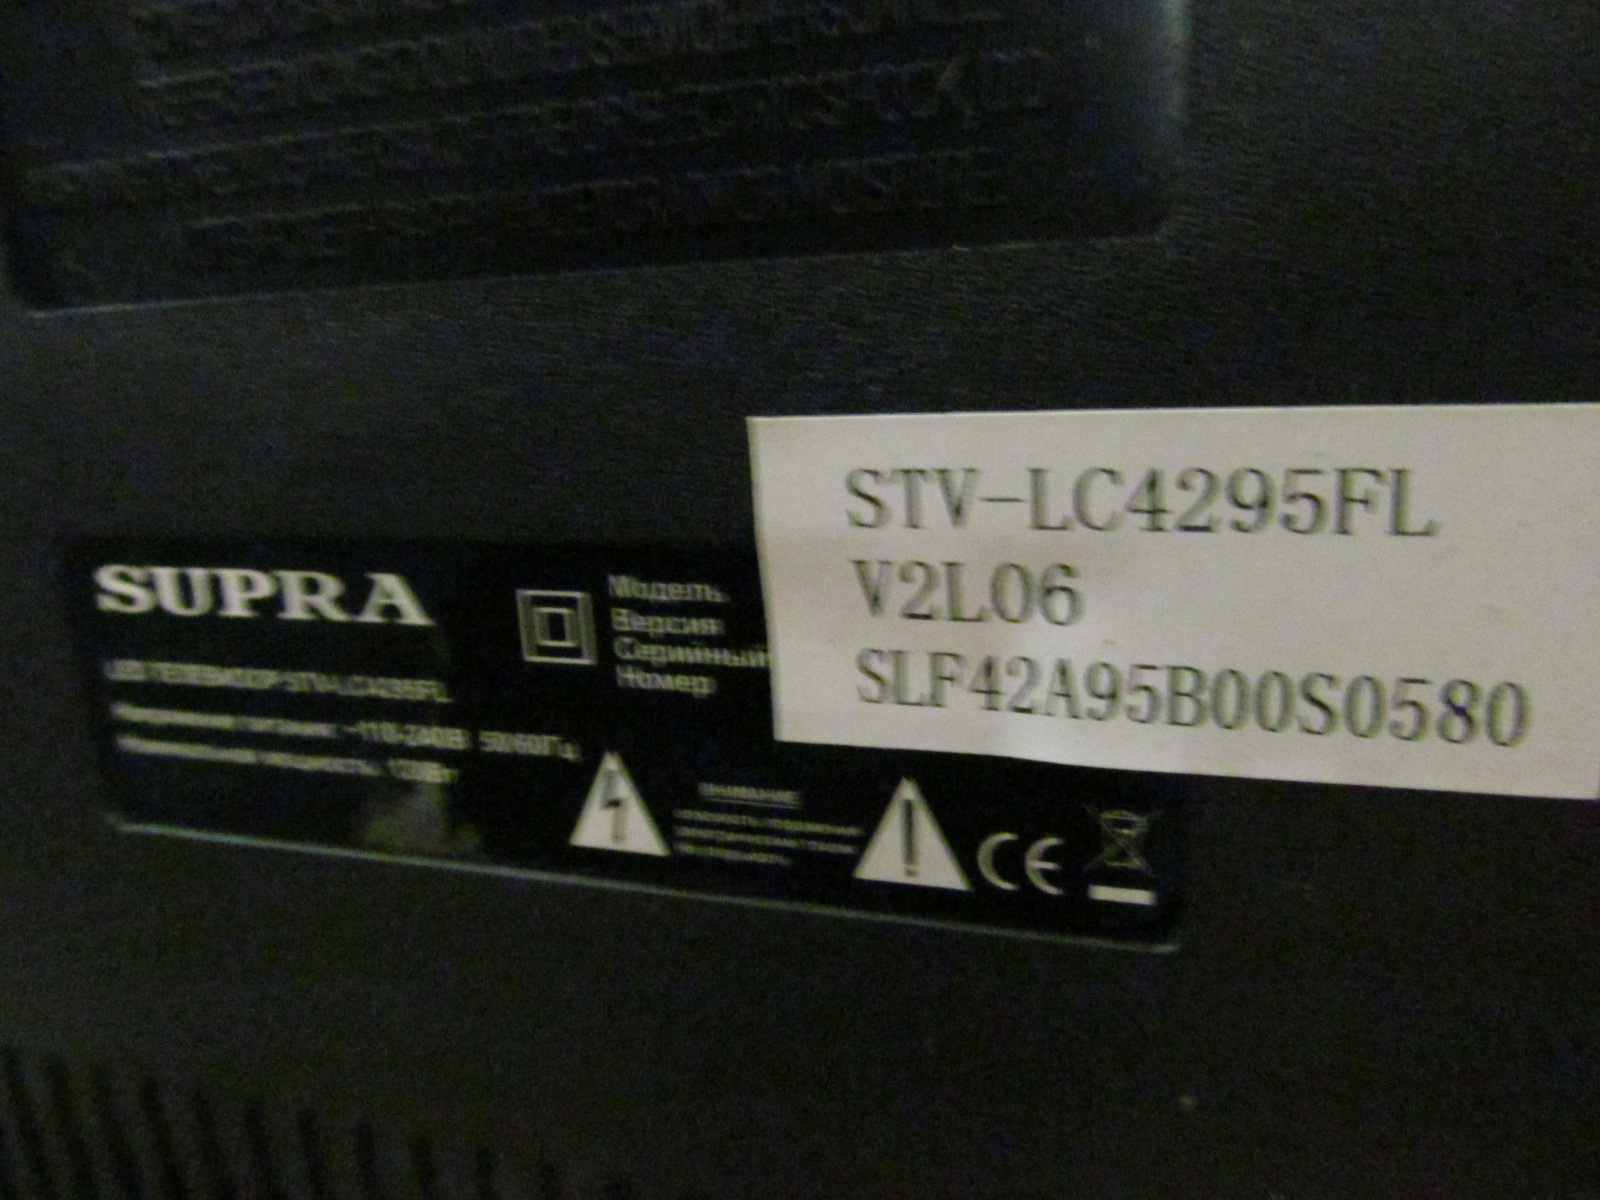 Код телевизора супра. Supra STV-lc42740fl led. Телевизор Supra 42. Supra STV lc4295fl v2k10 cjcnfd. Разбор Supra STV lc4295fl.